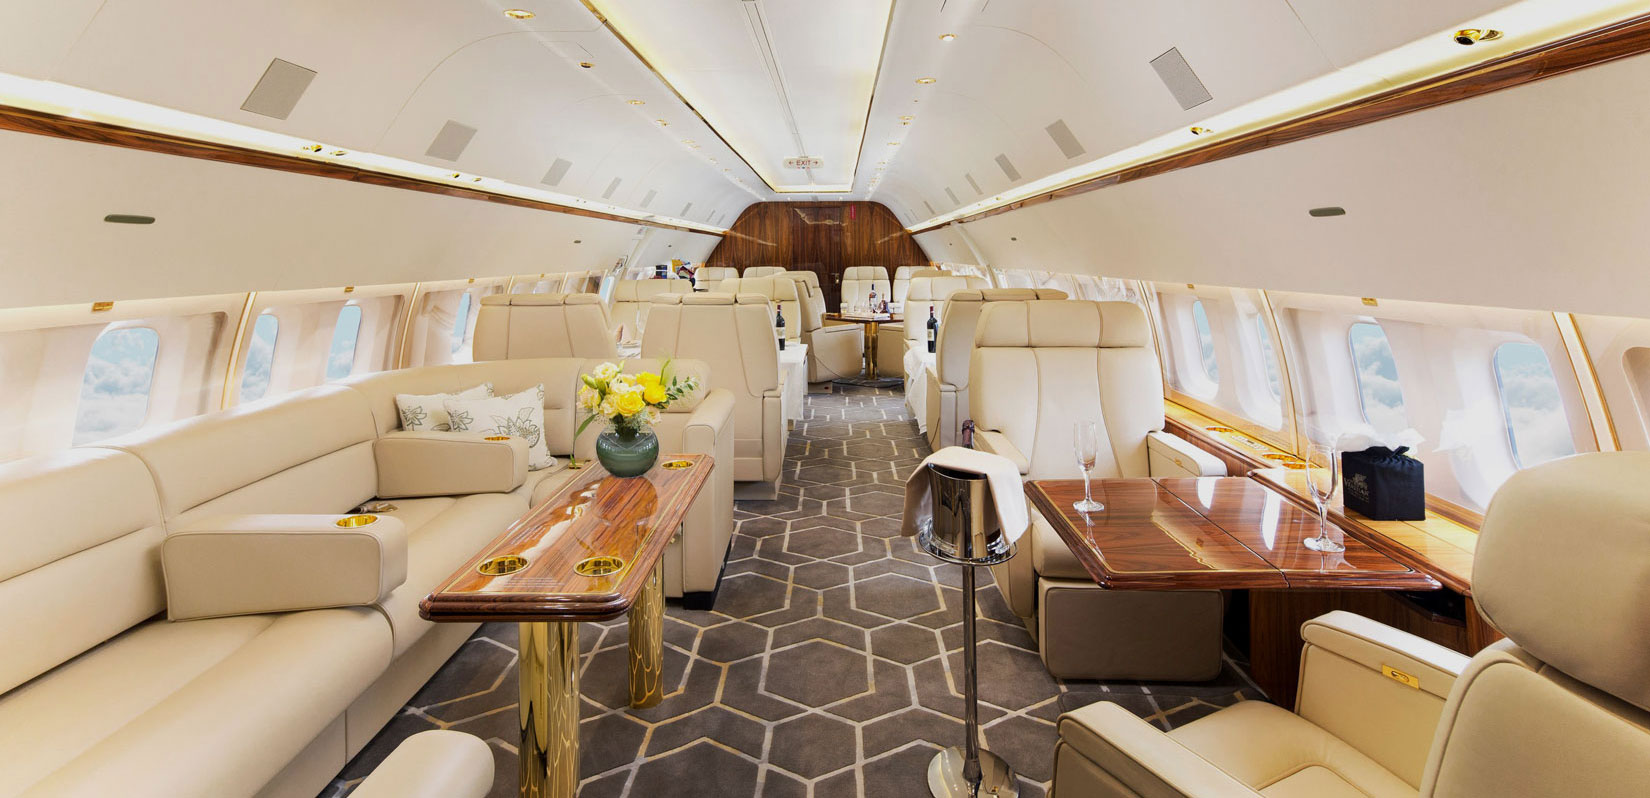 Superlative, world-class VIP/VVIP aircraft interior completions